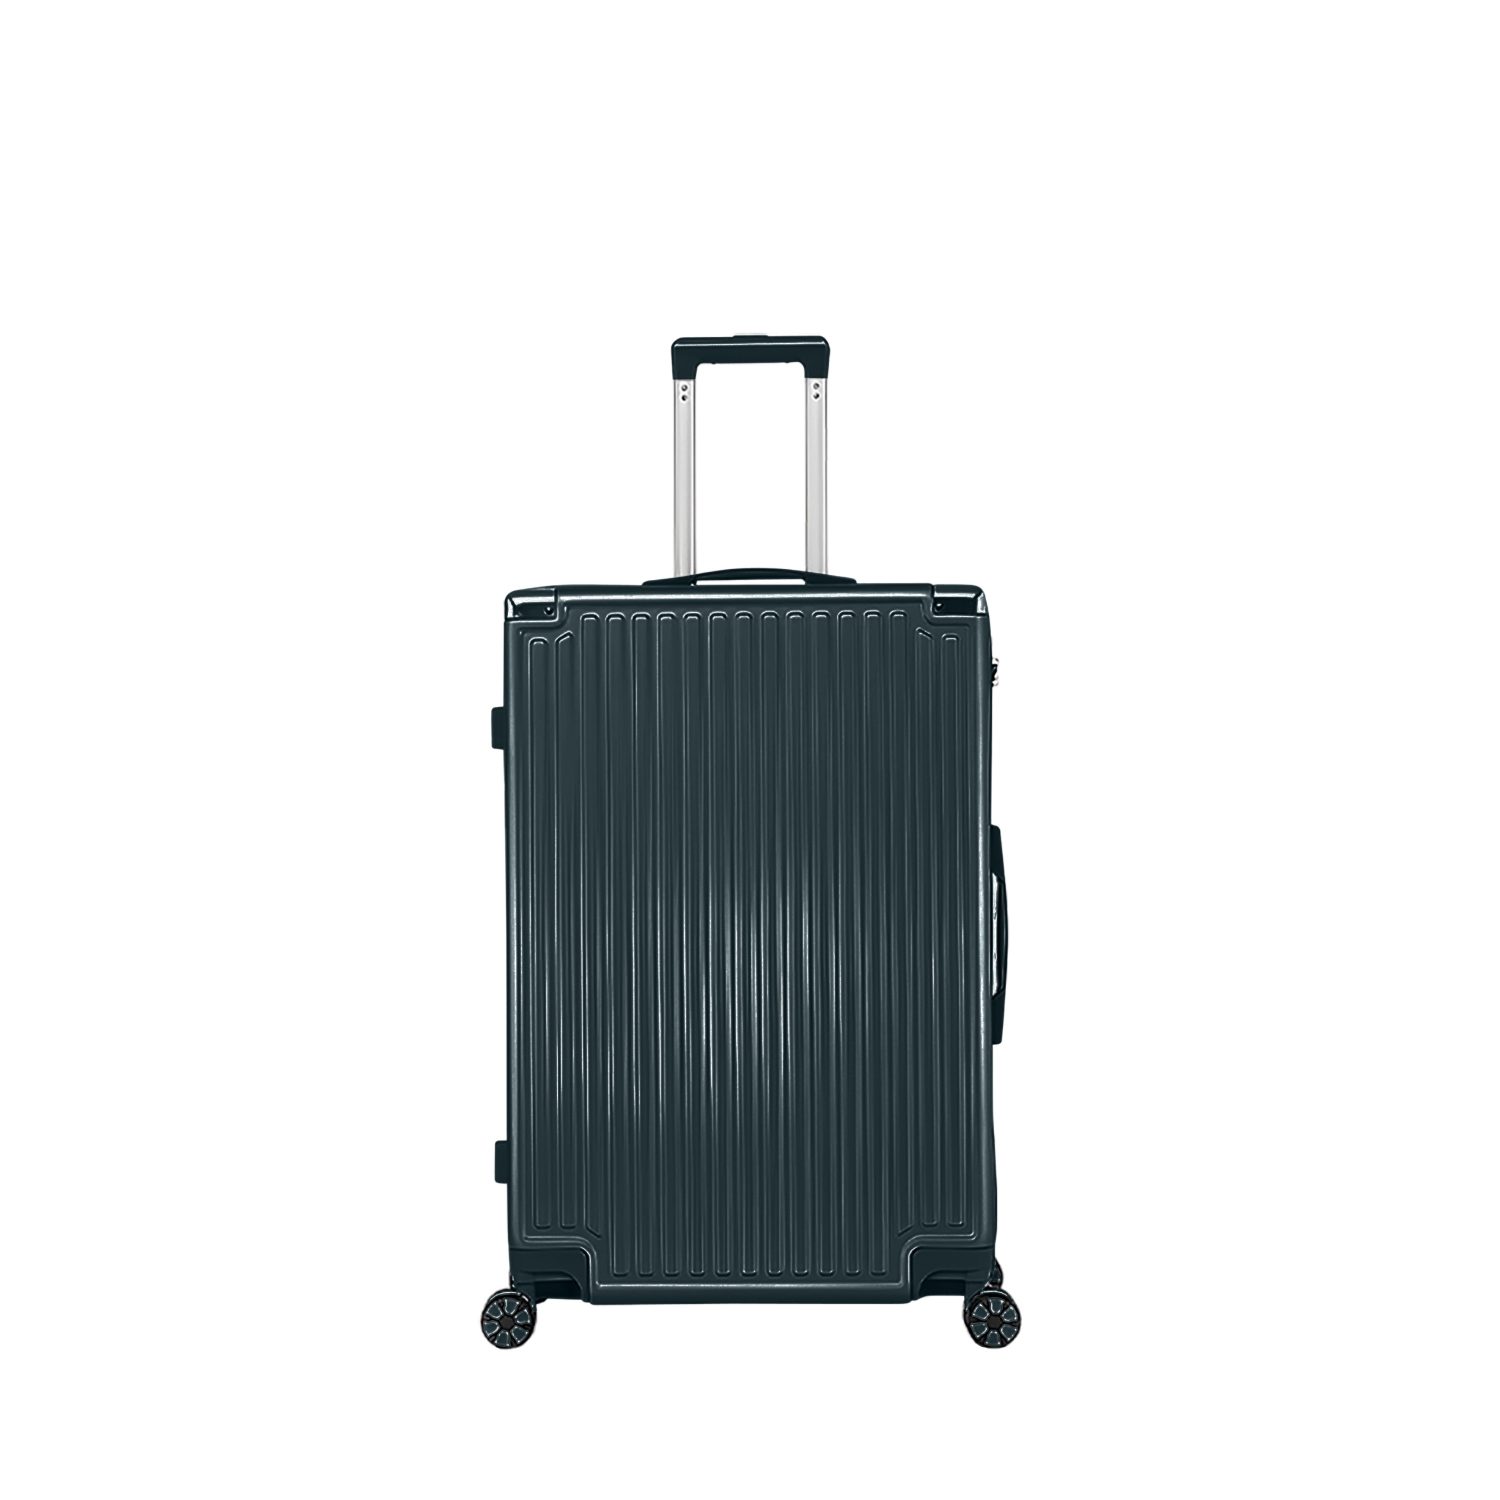 WINGOMART Luggage Lightweight Durable PC+ABS Hardshell, Double Spinner Wheels, TSA Lock - 24in - Deep Sea Green